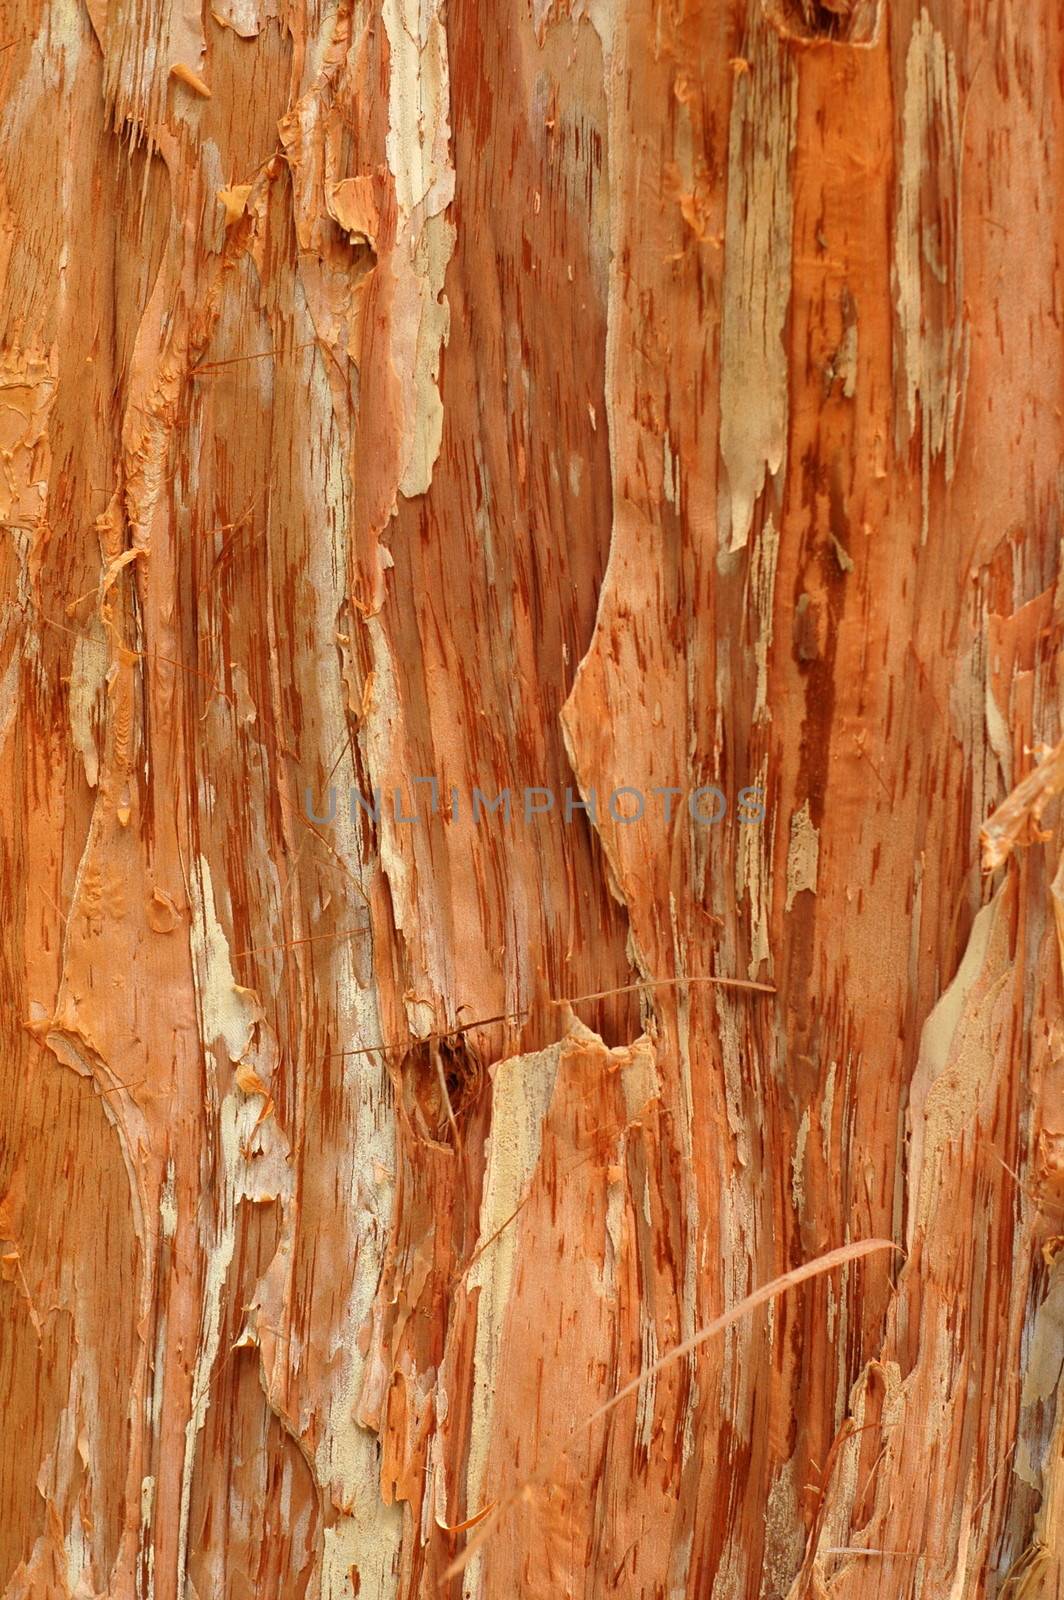 Paper Bark Tree by mrdoomits